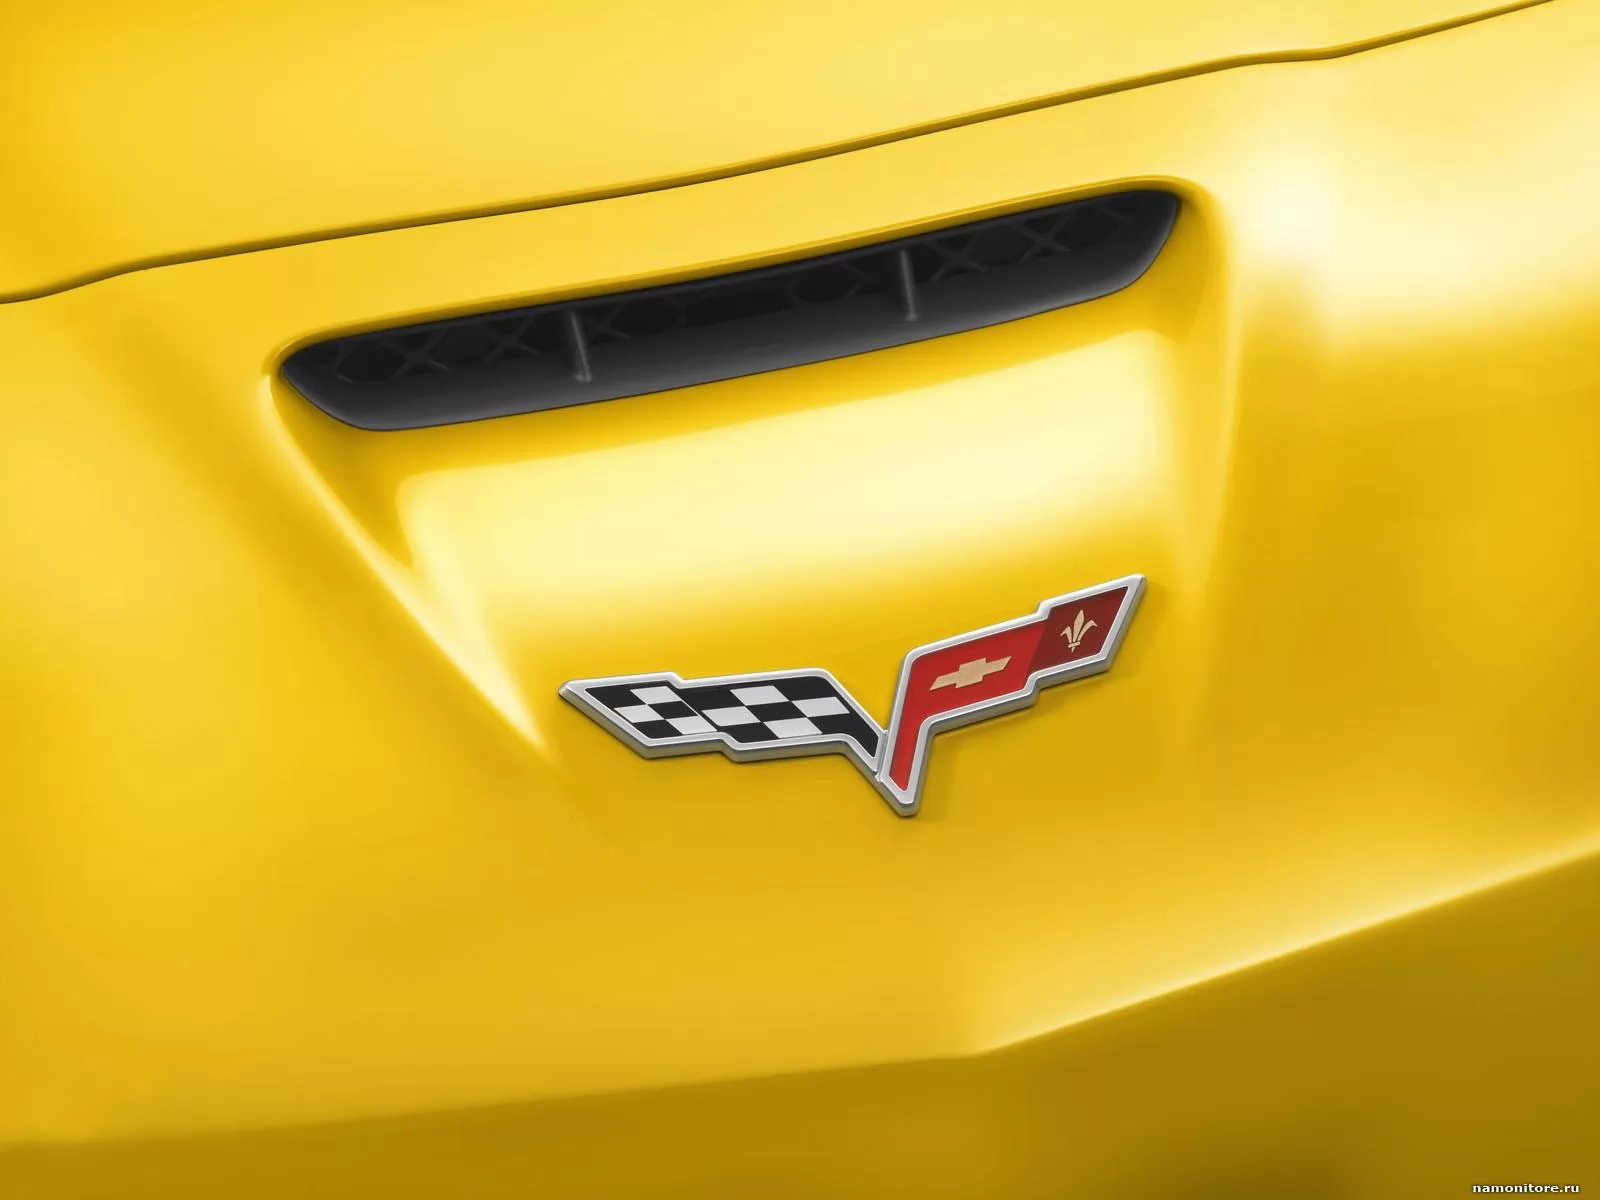 Chevrolet Corvette-C6-Z06, Chevrolet, автомобили, жёлтое, техника х